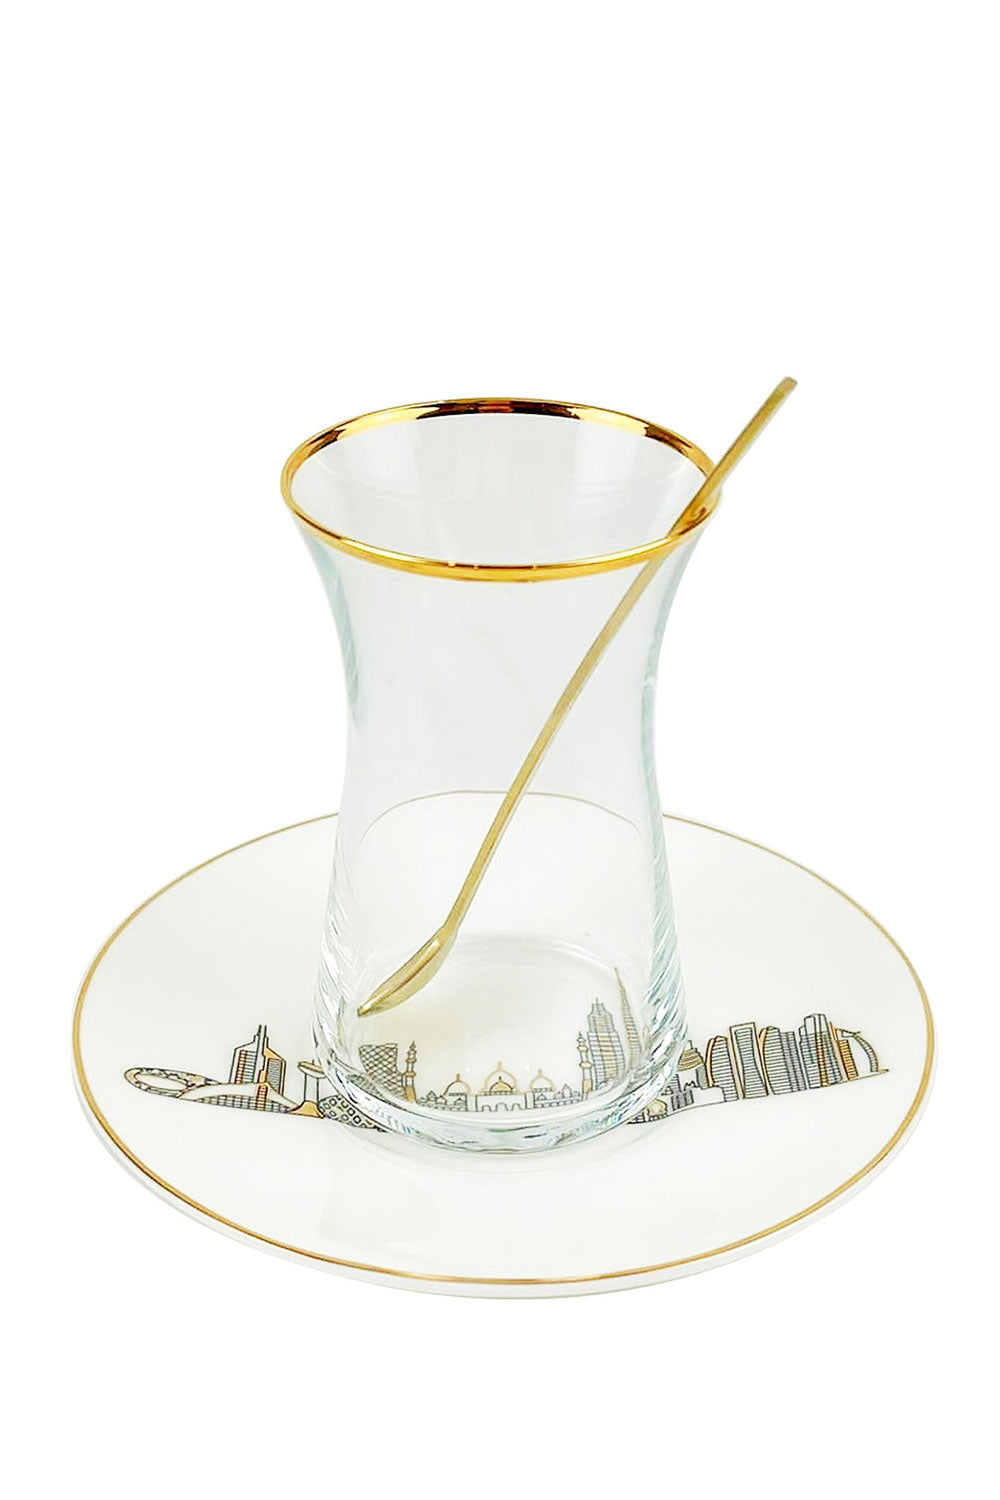 UAE Skyline Tea Cup with Saucer, Set of 6 - Maison7